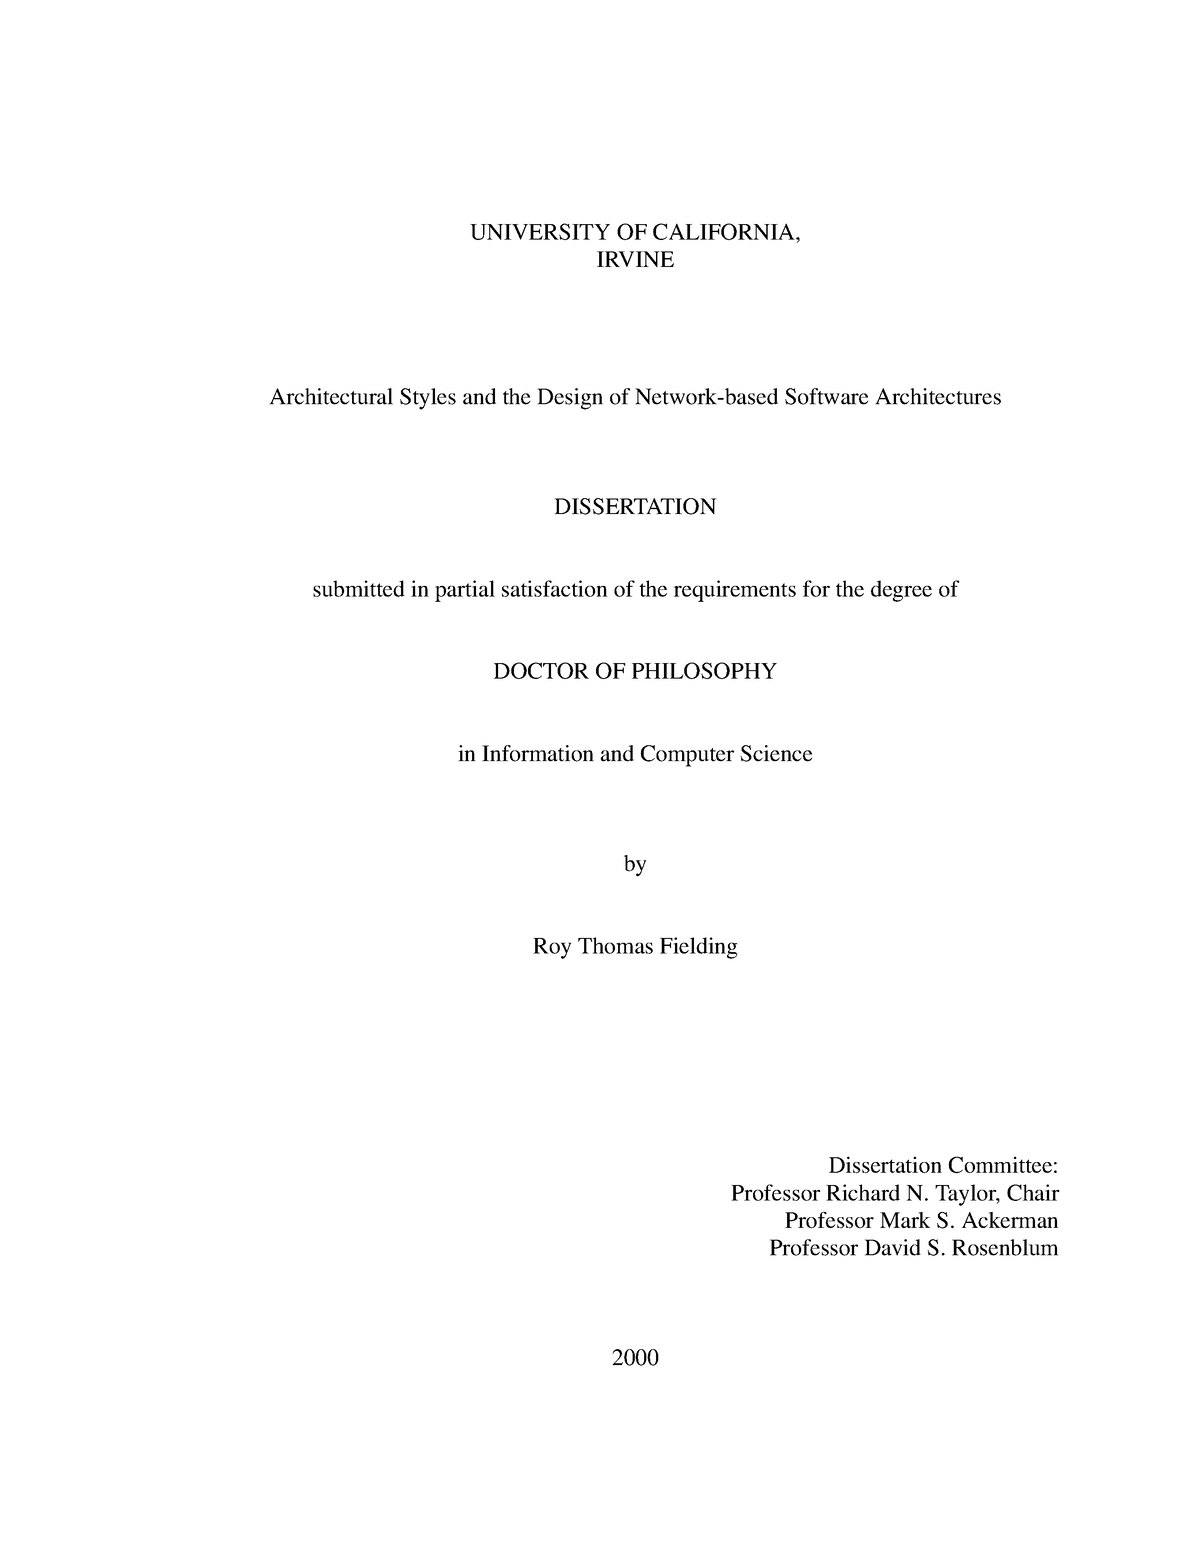 roy thomas fielding dissertation pdf